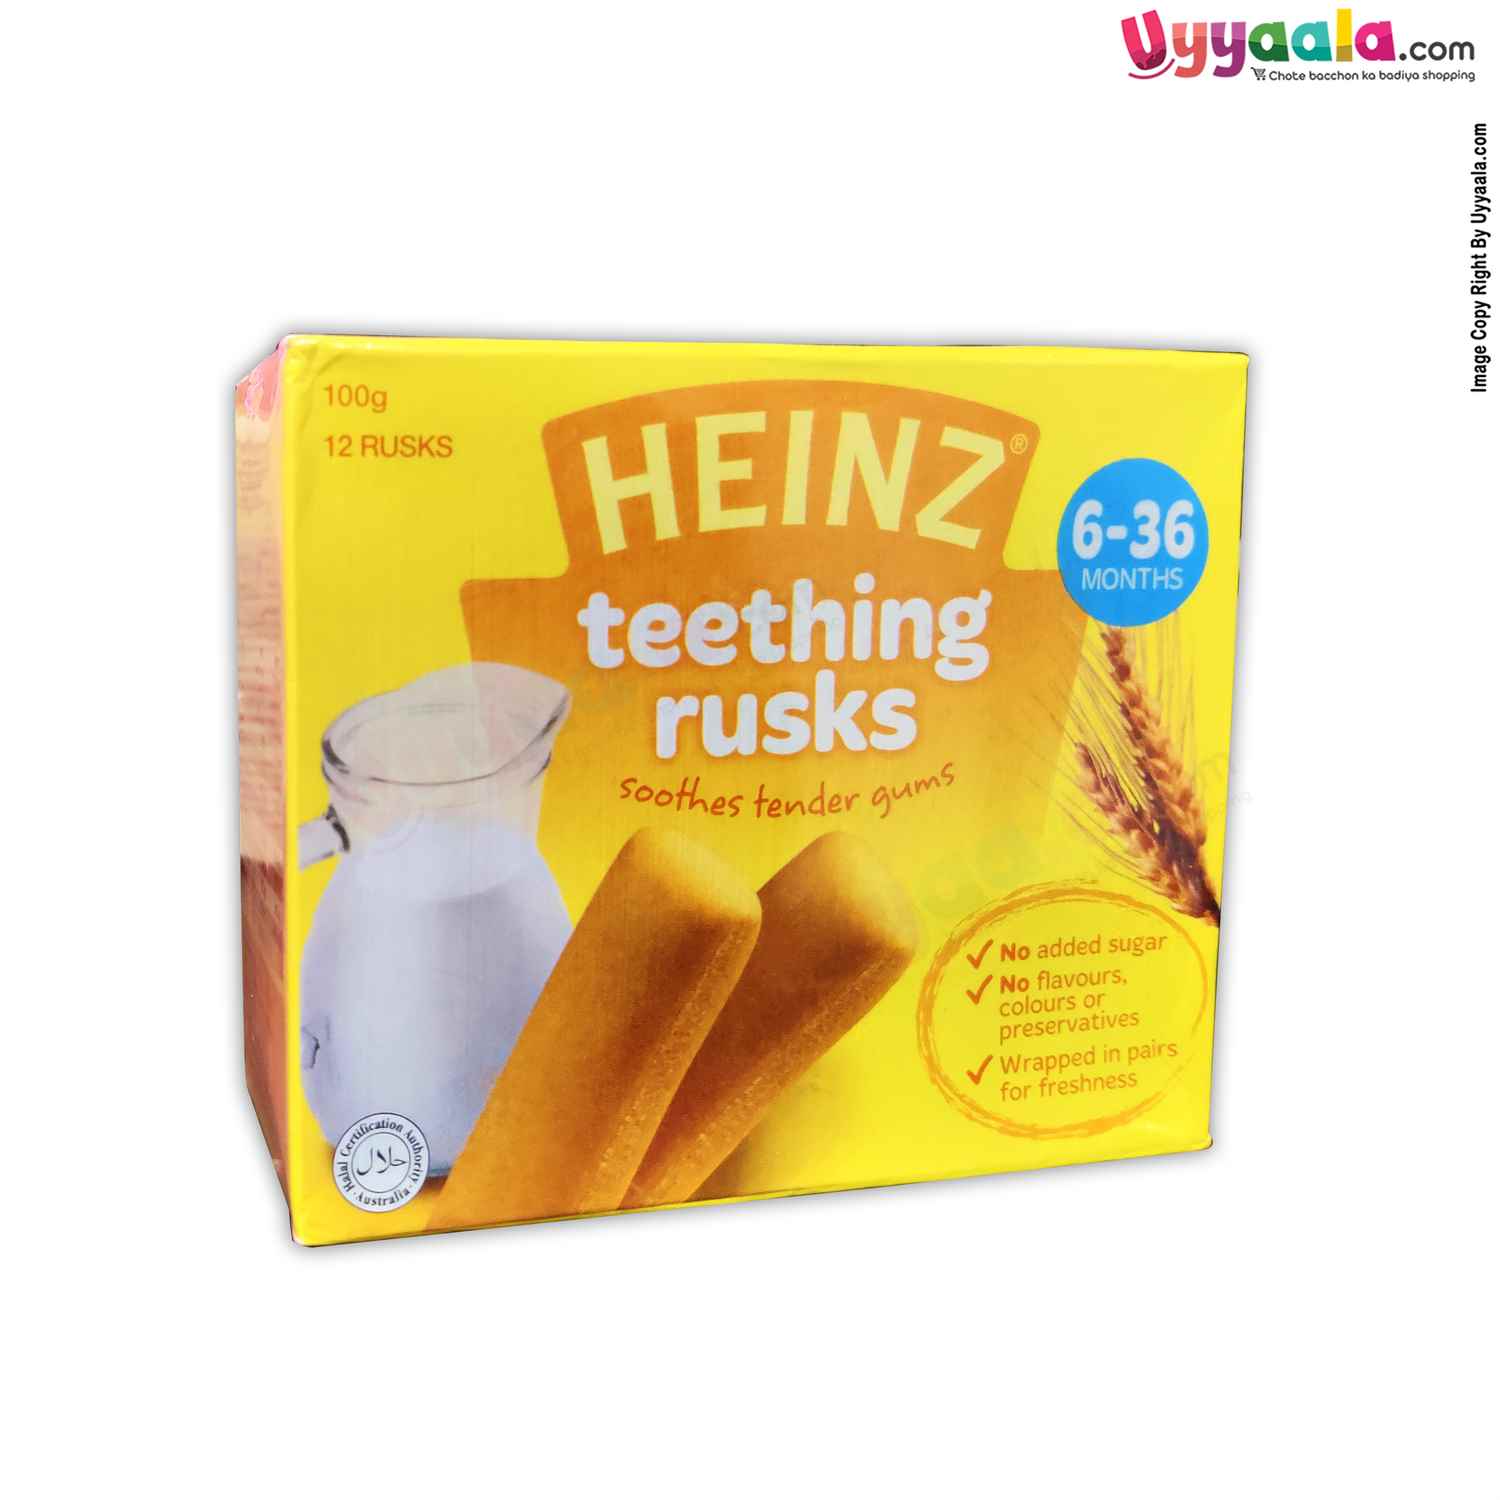 HEINZ Teething Rusks for Kids snacks (100 g each) - (6months+)